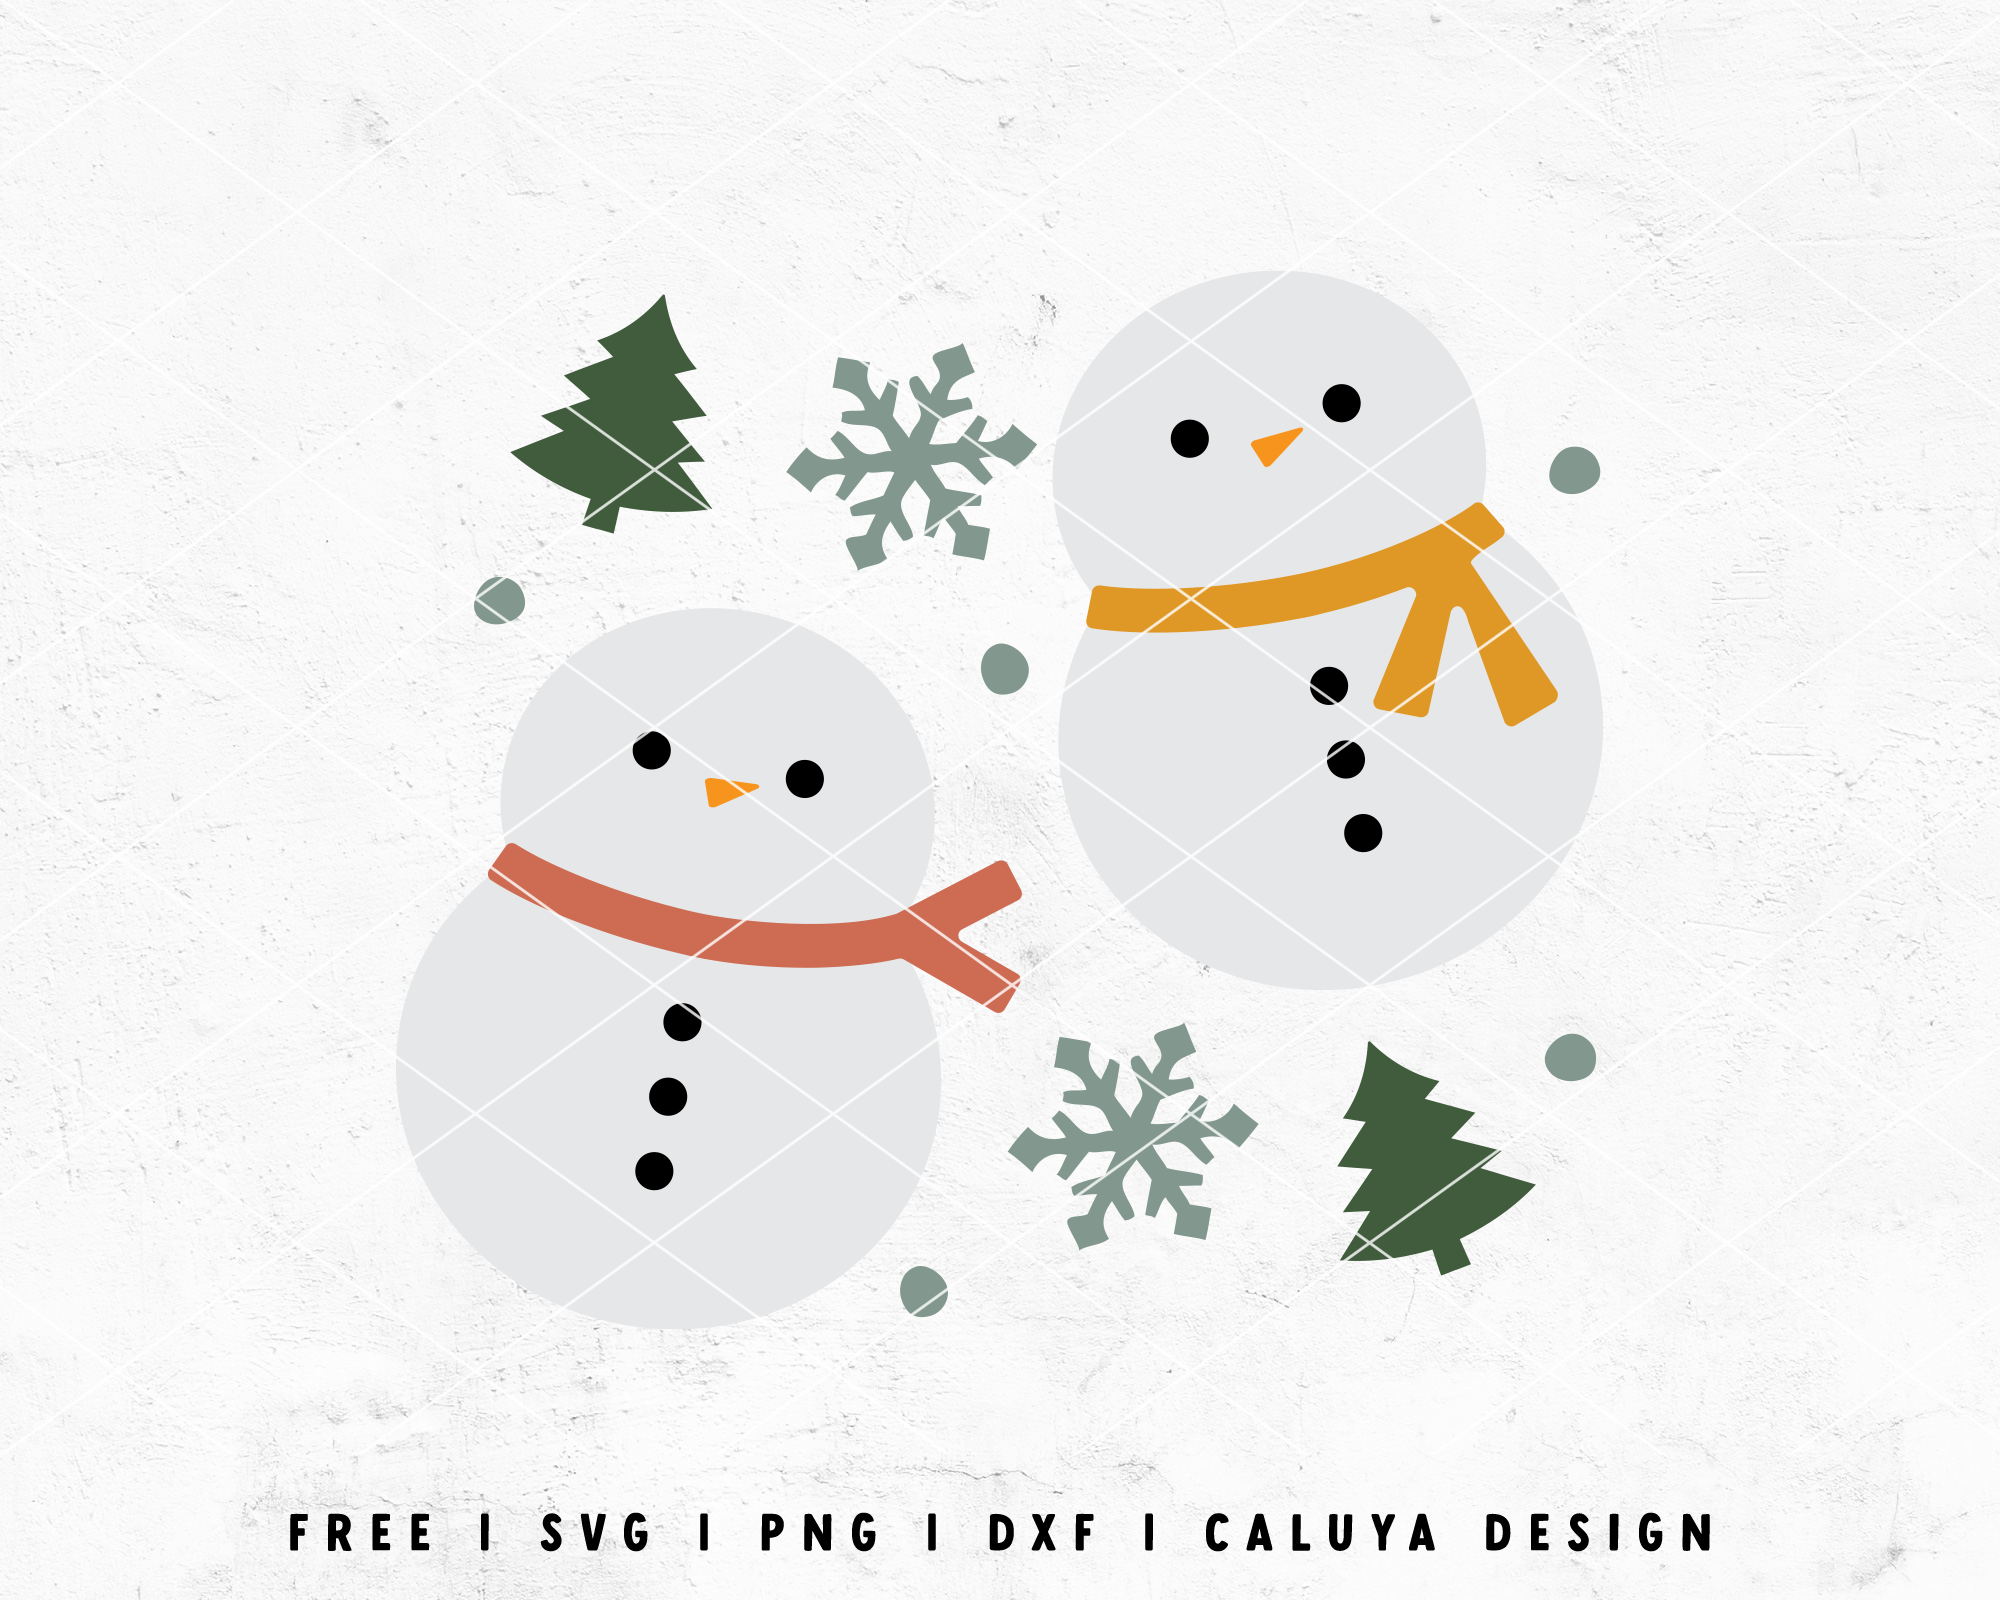 Melted Snowman SVG scrapbook cut file cute clipart files for silhouette  cricut pazzles free svgs free svg cuts cute cut files